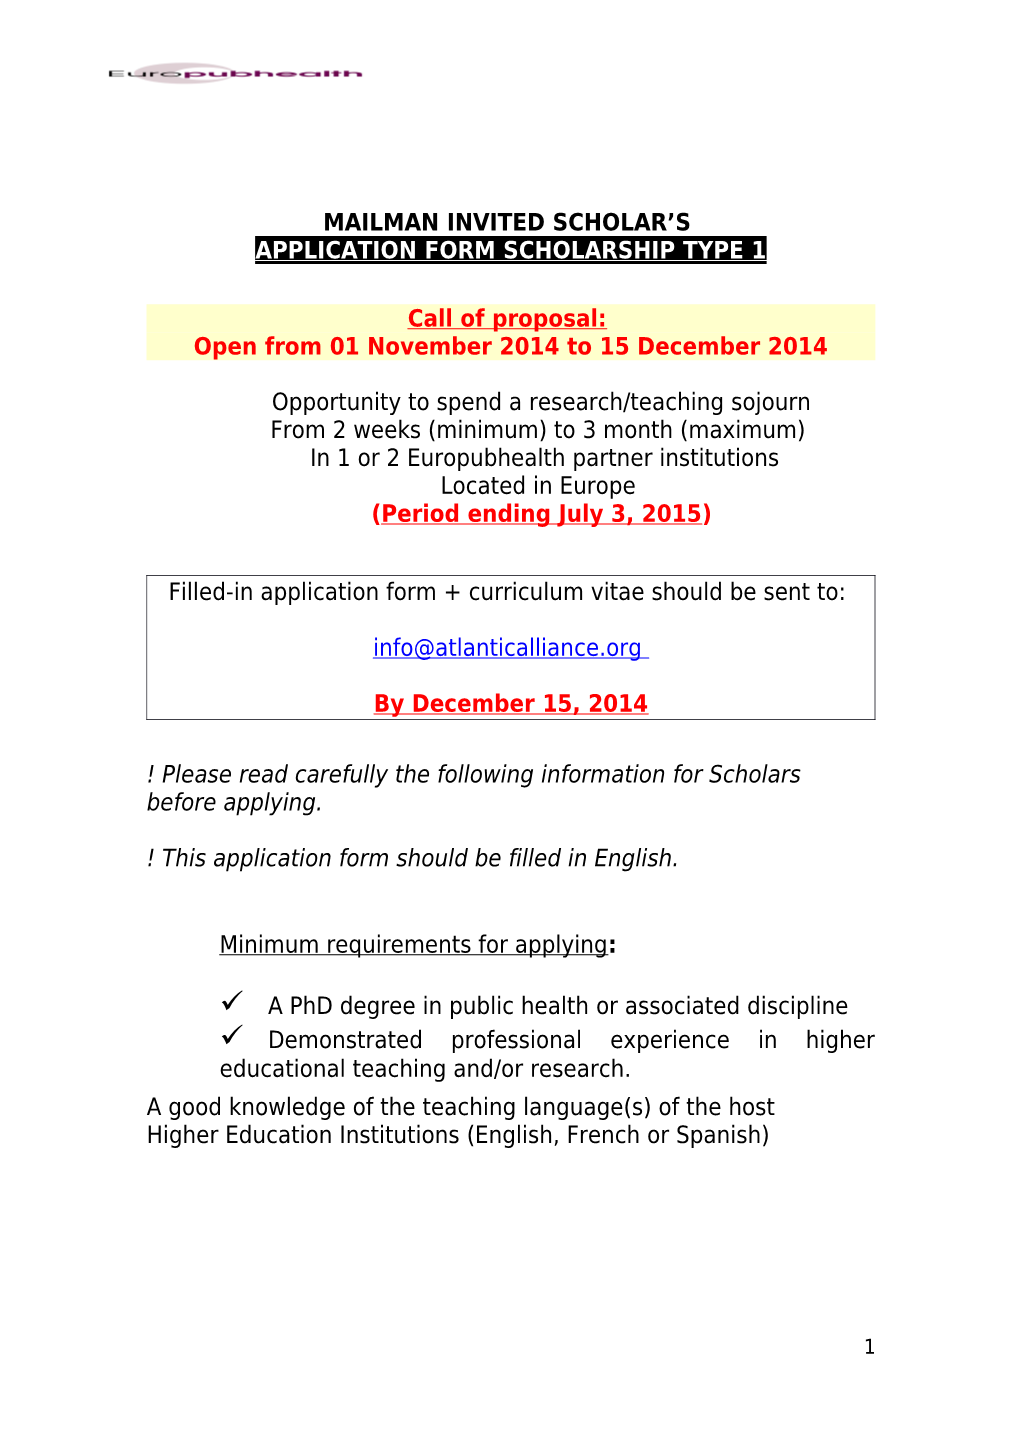 Application Form Scholarship Type 1